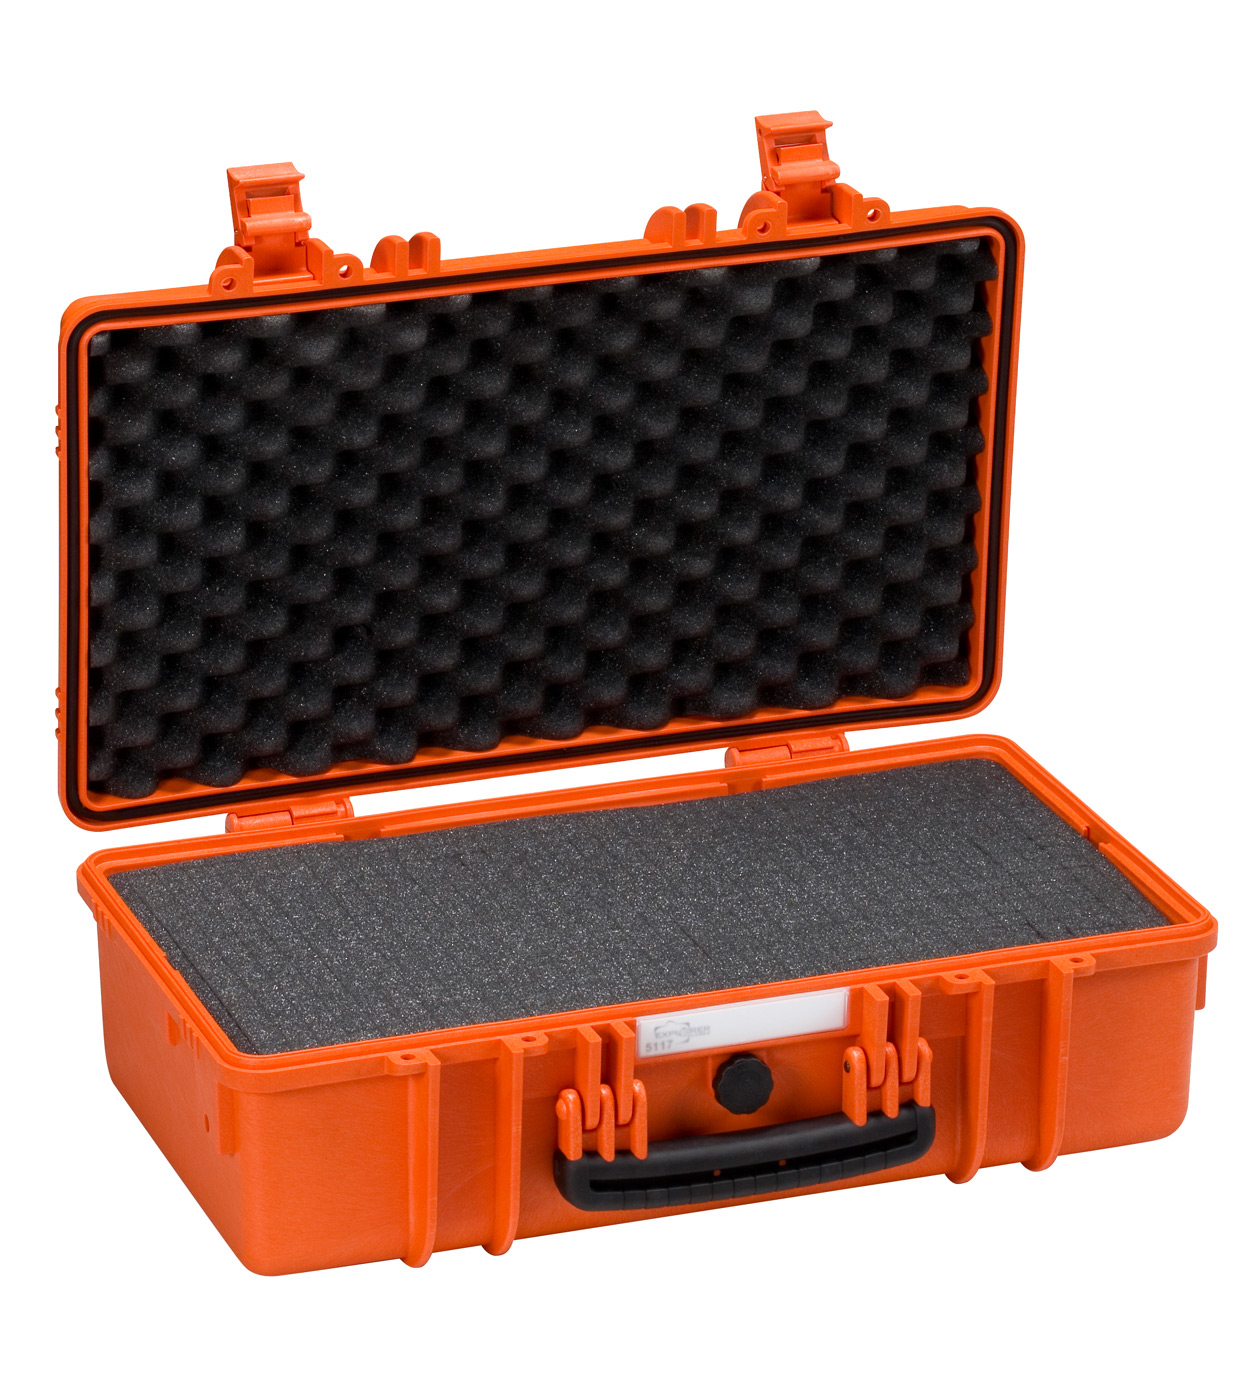 Maleta Explorer Cases 5117 color naranja | Maletas Estancas